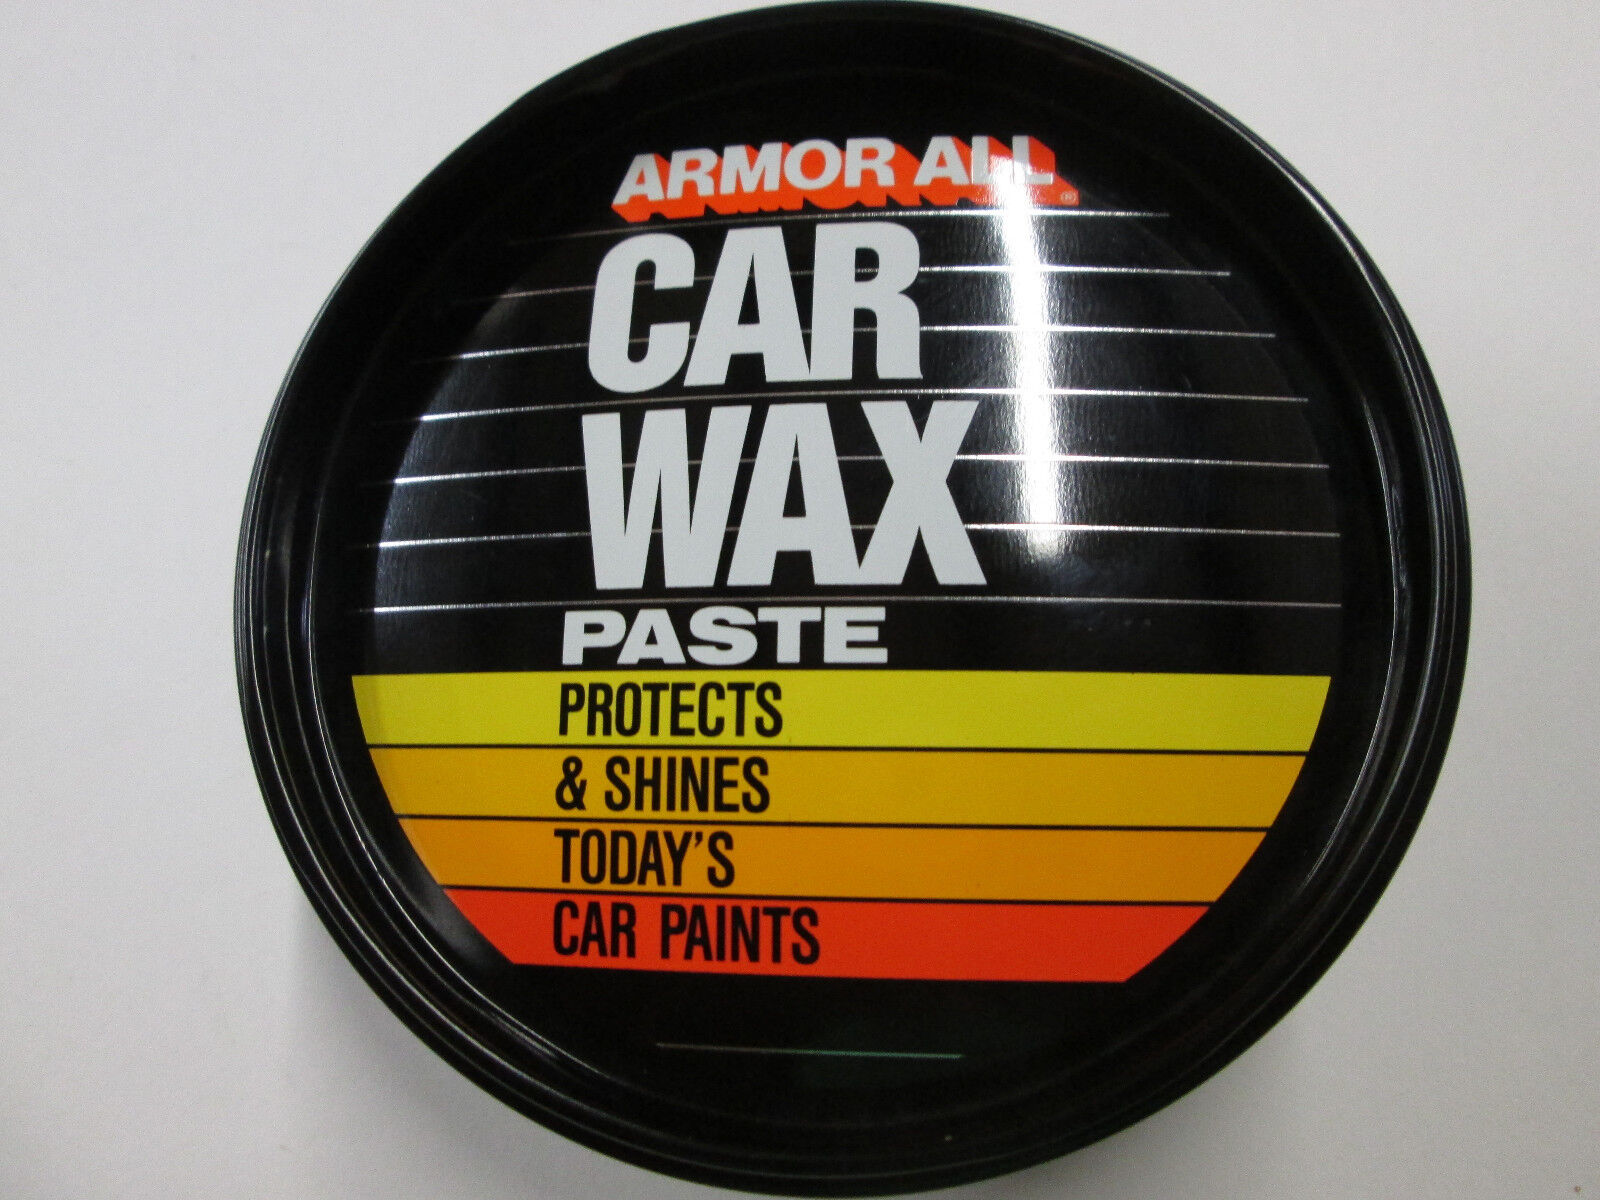 Vintage Armor All Car Wax Paste - 14 oz. Can